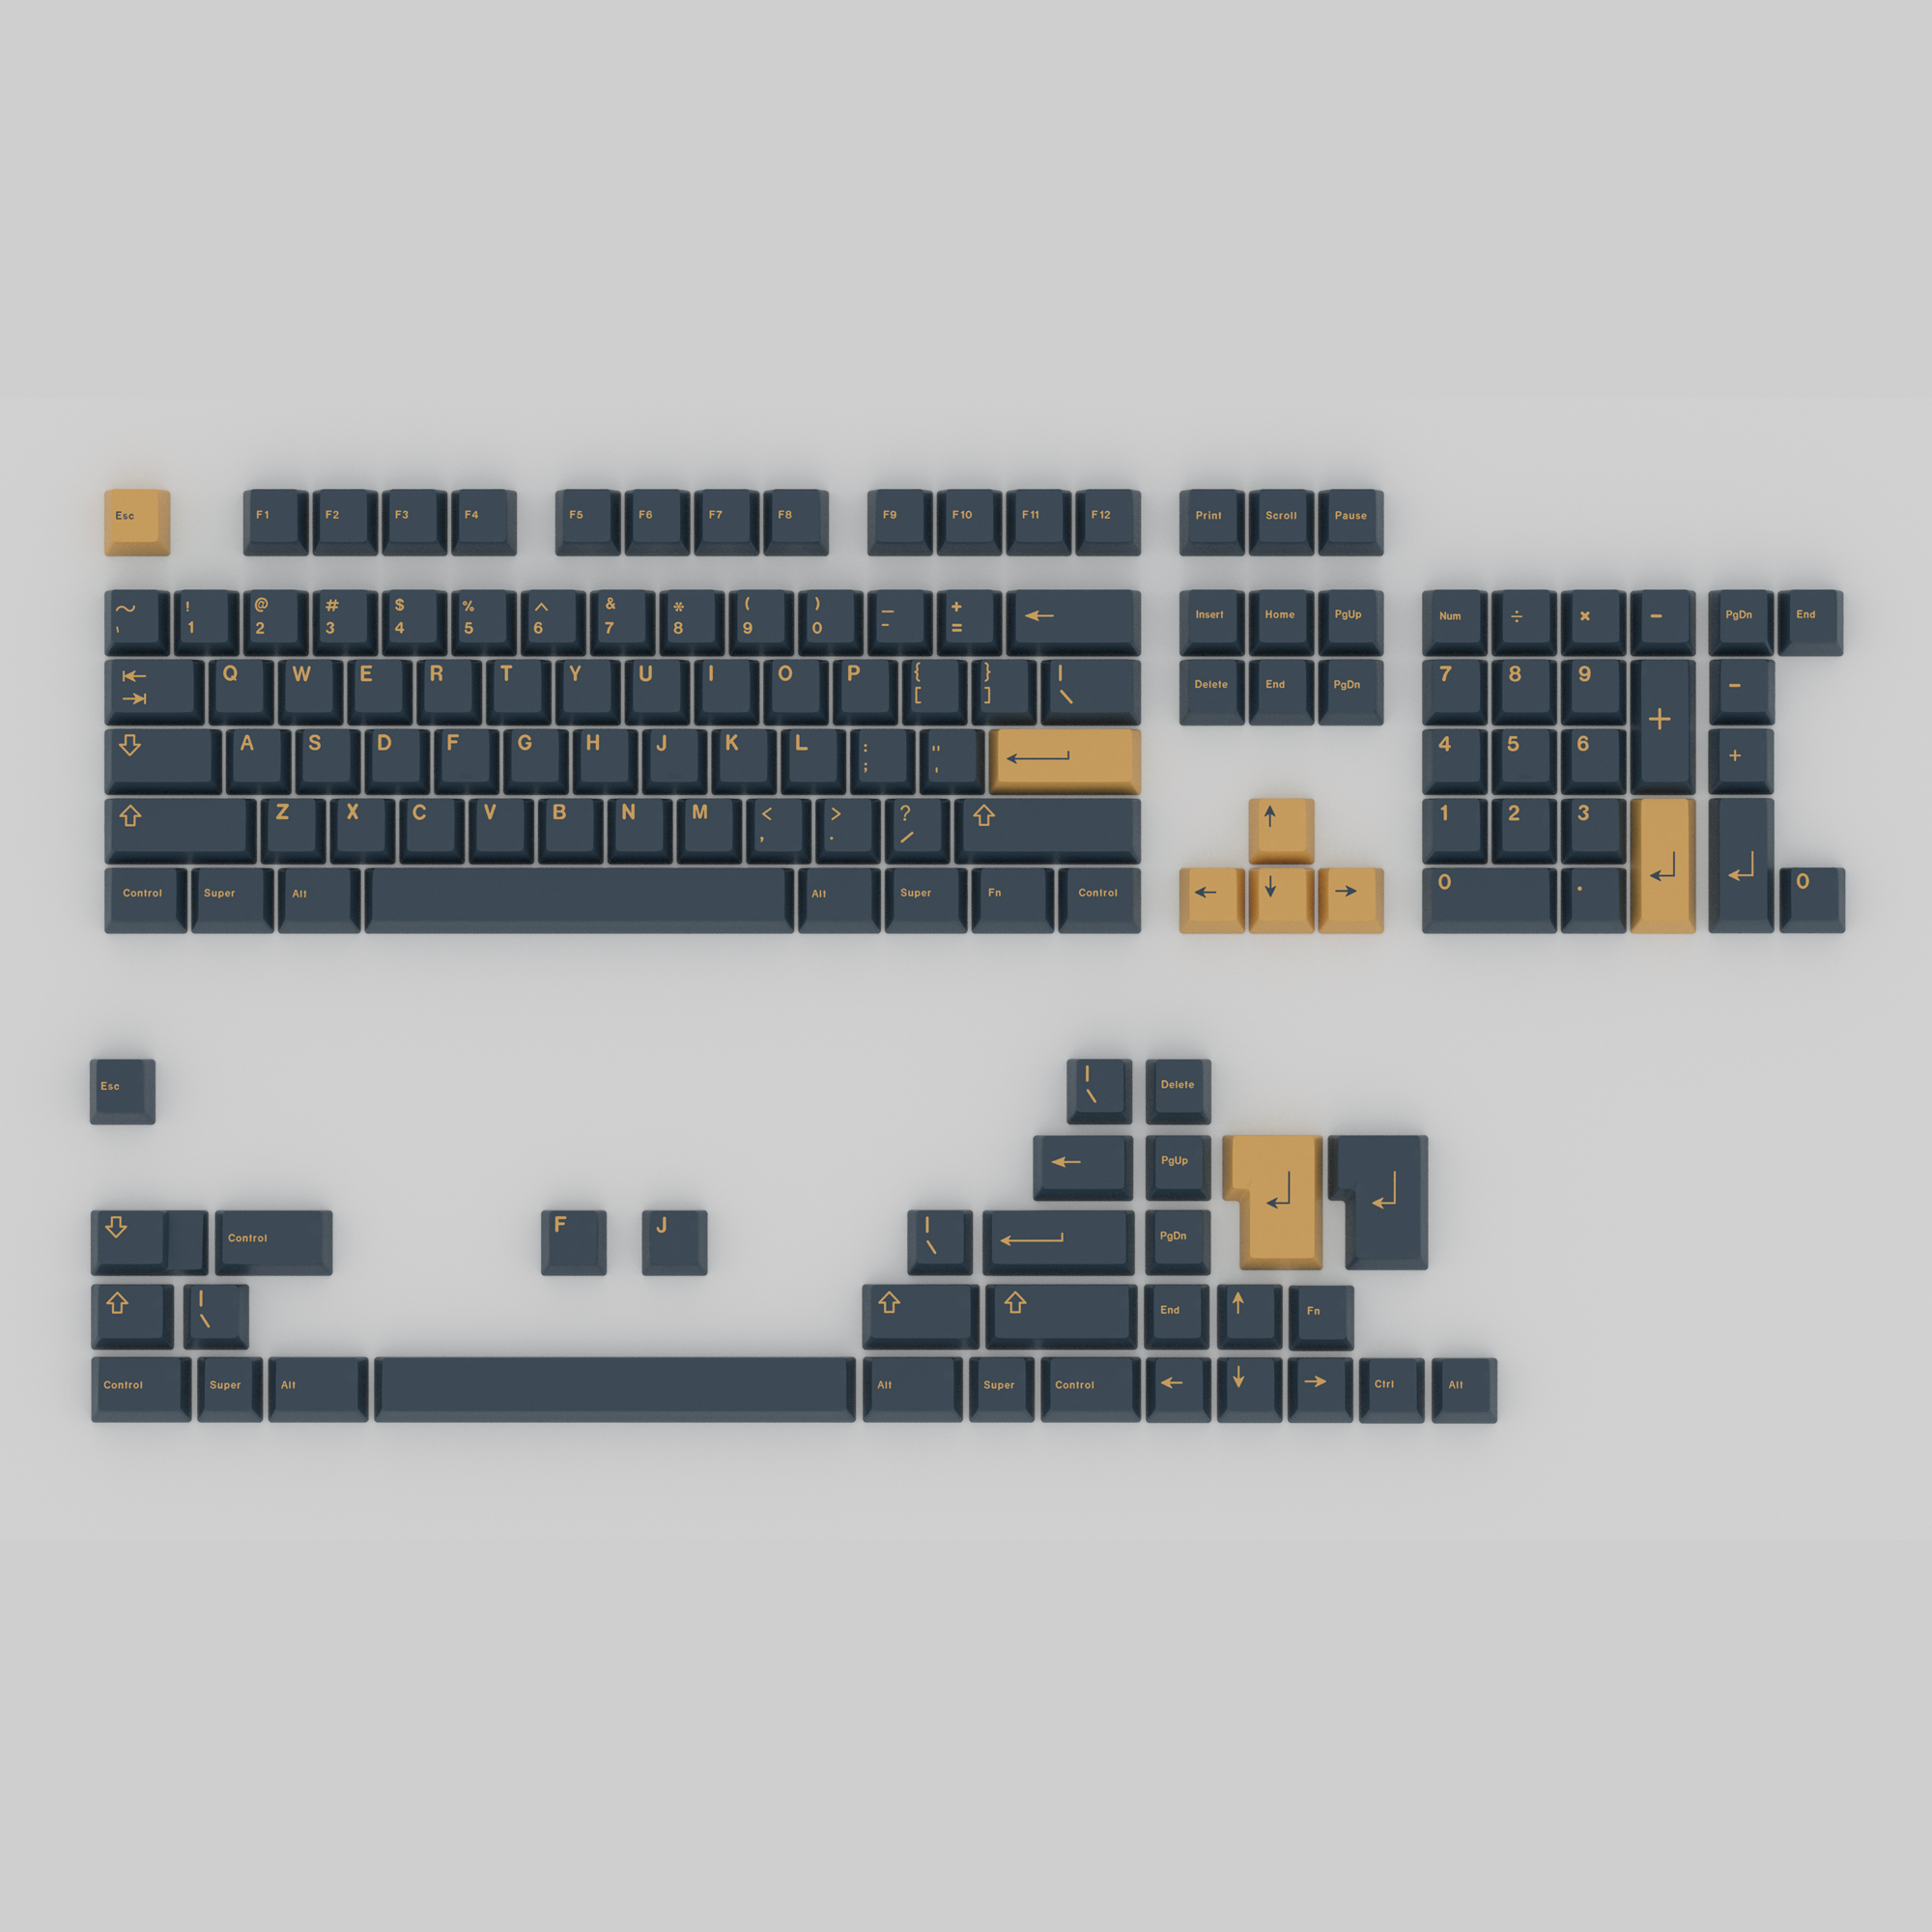 KBDfans Custom Keyboard GMK Moonlight